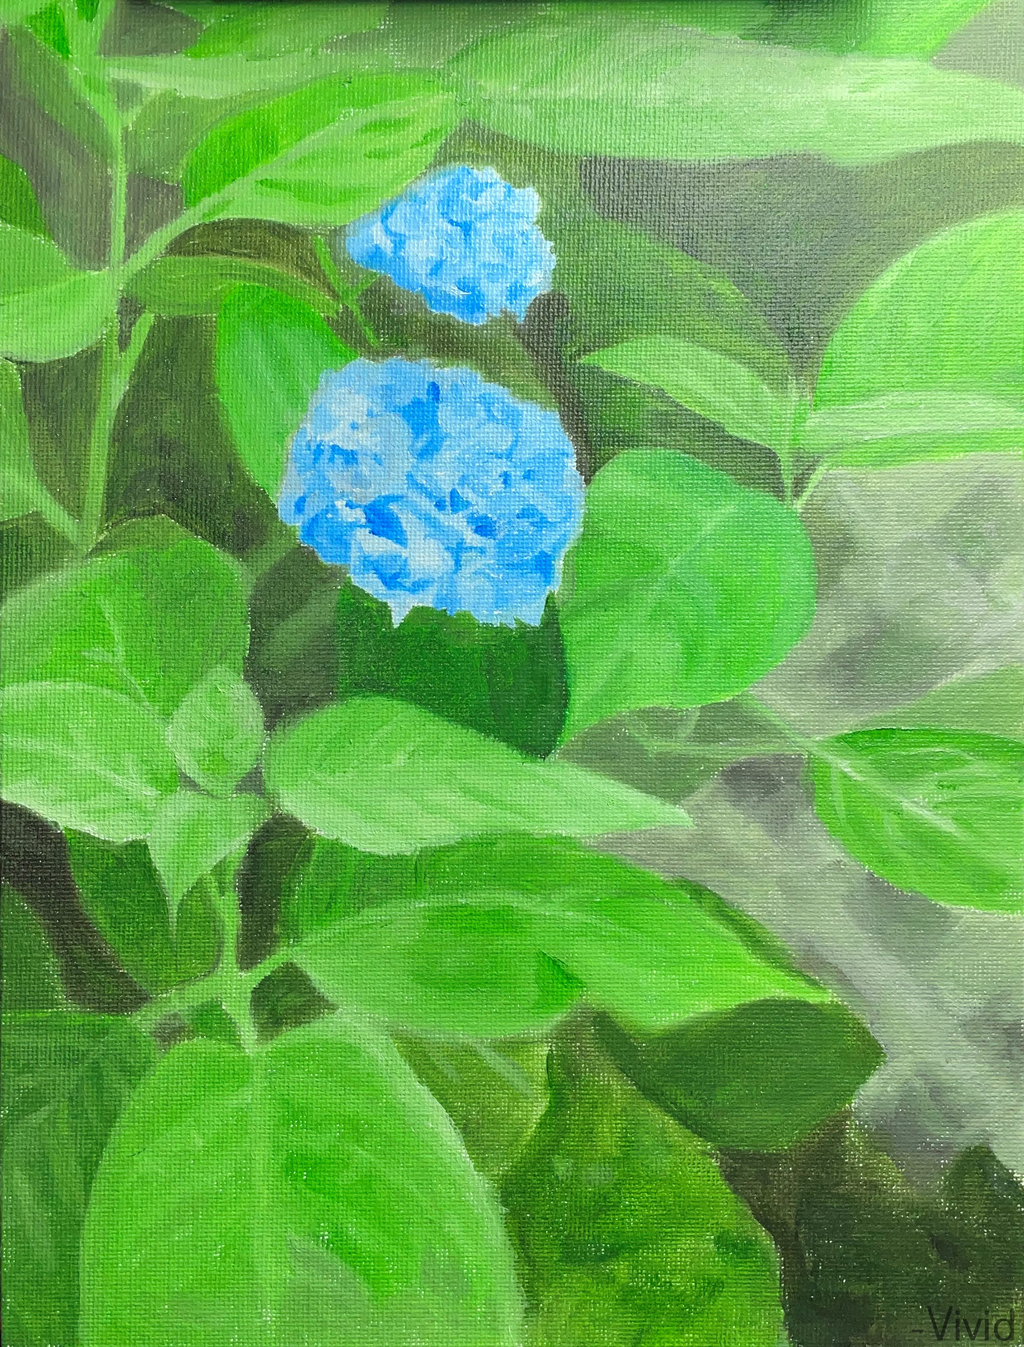 Painting of Blue Hydrangeas Flowers